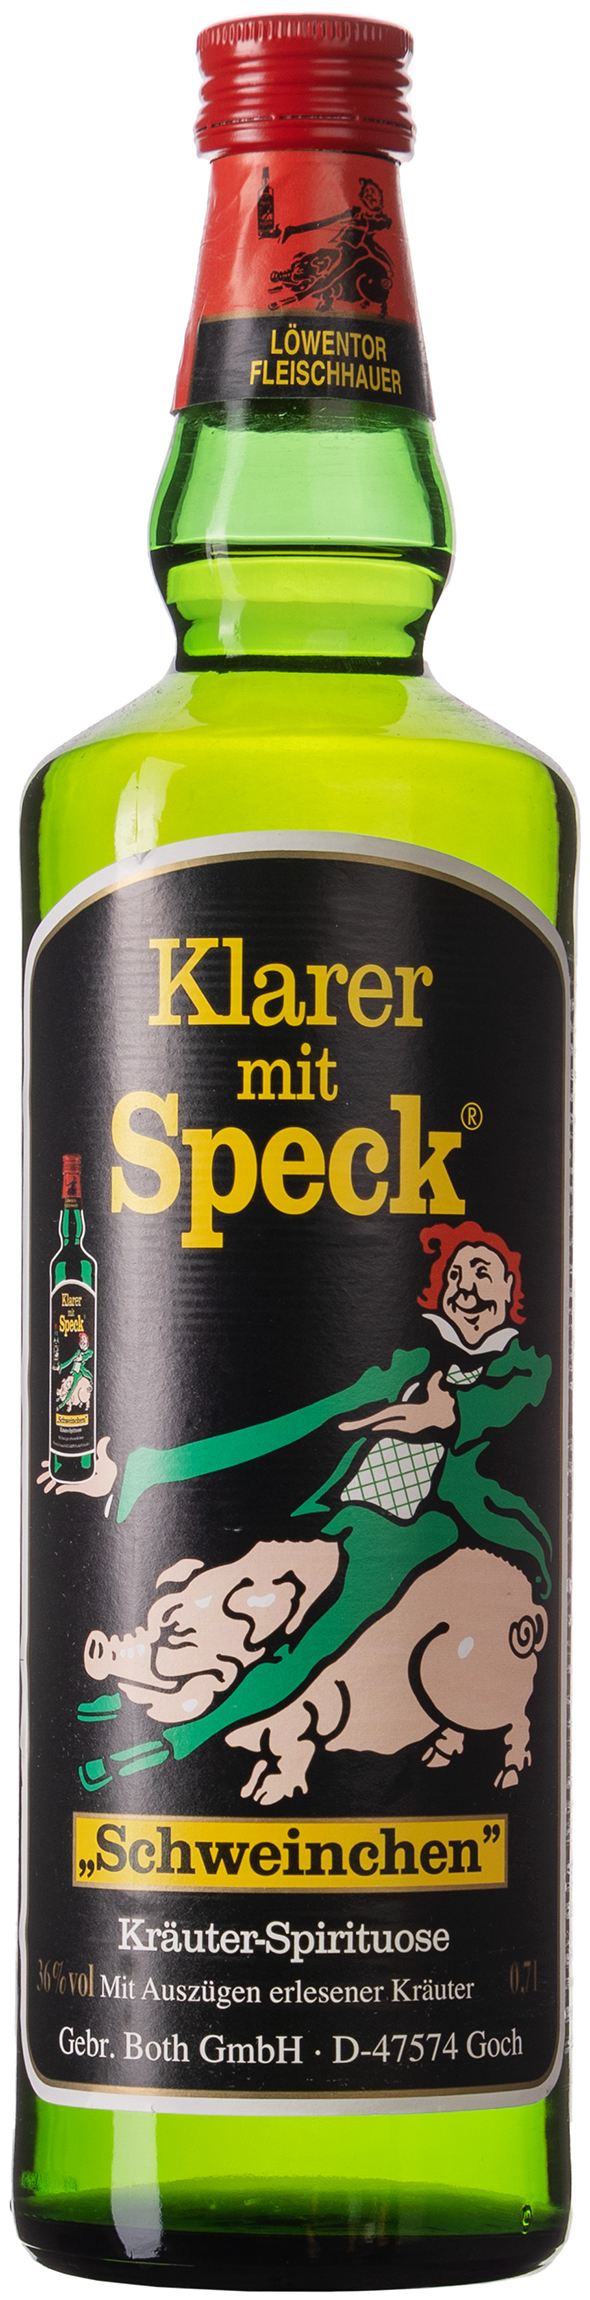 Klarer mit Speck 36% vol. 0,7L